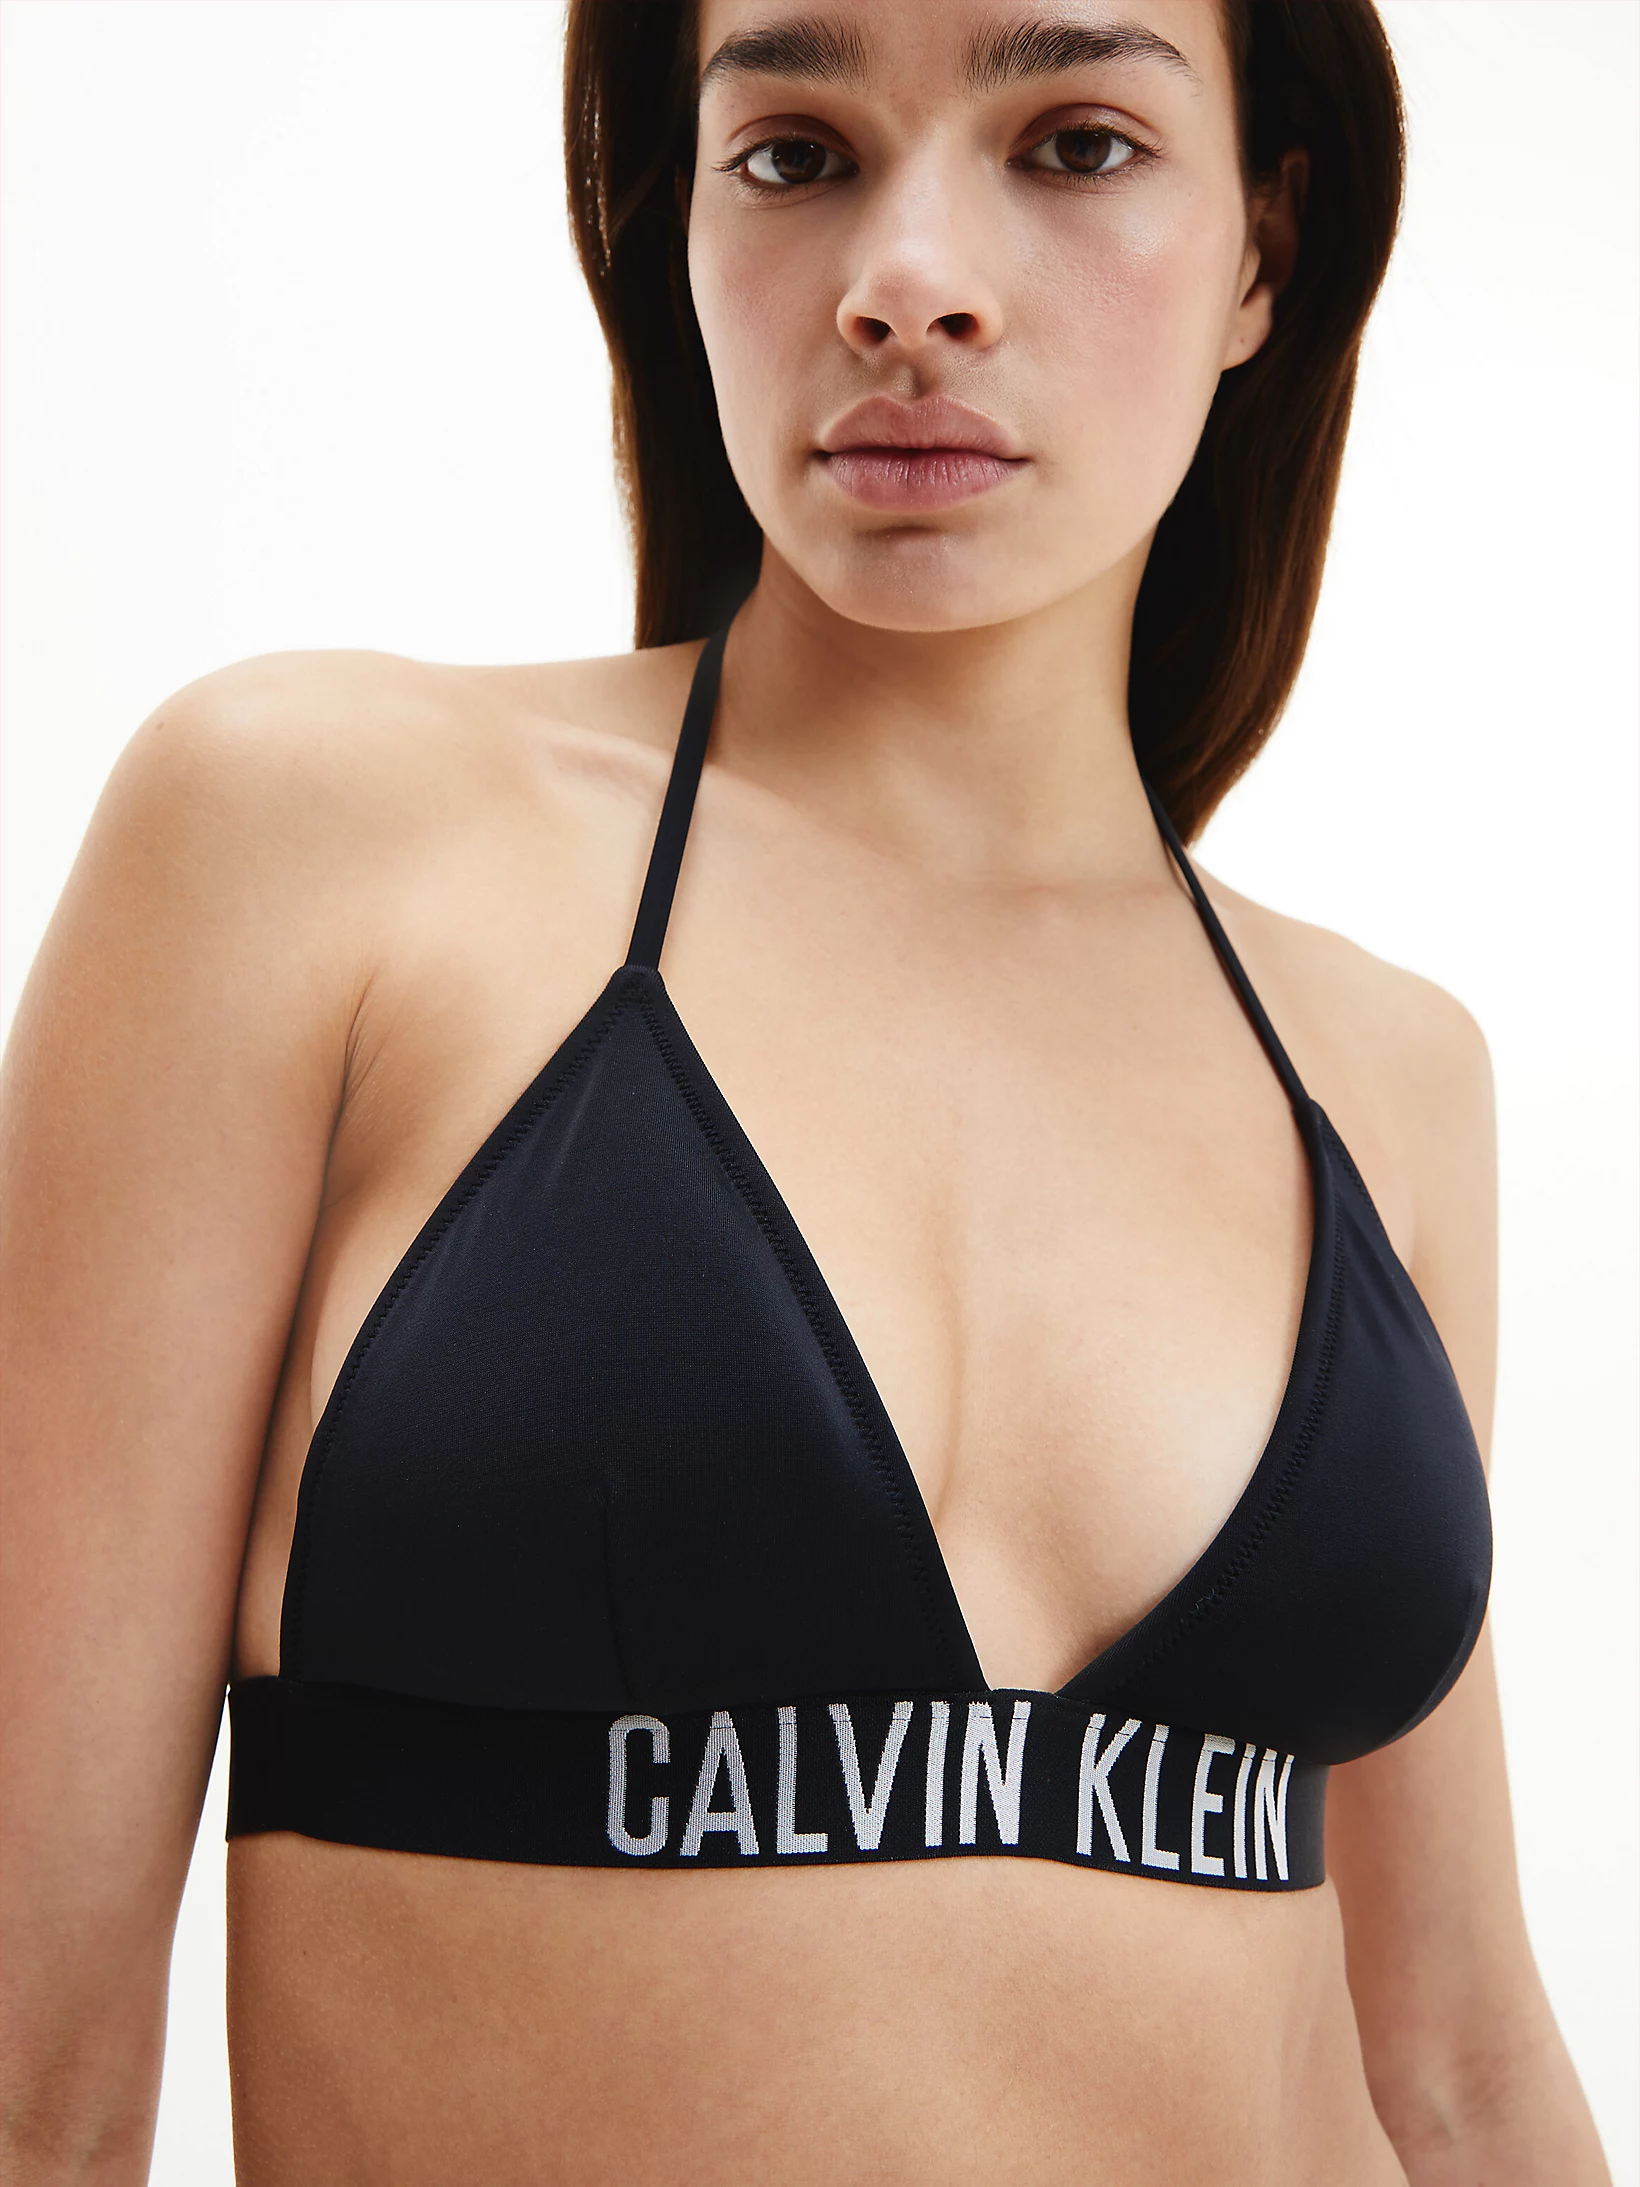 poverty marketing literally Triangle Bikini Top Calvin Klein Deals, SAVE 34% - aveclumiere.com